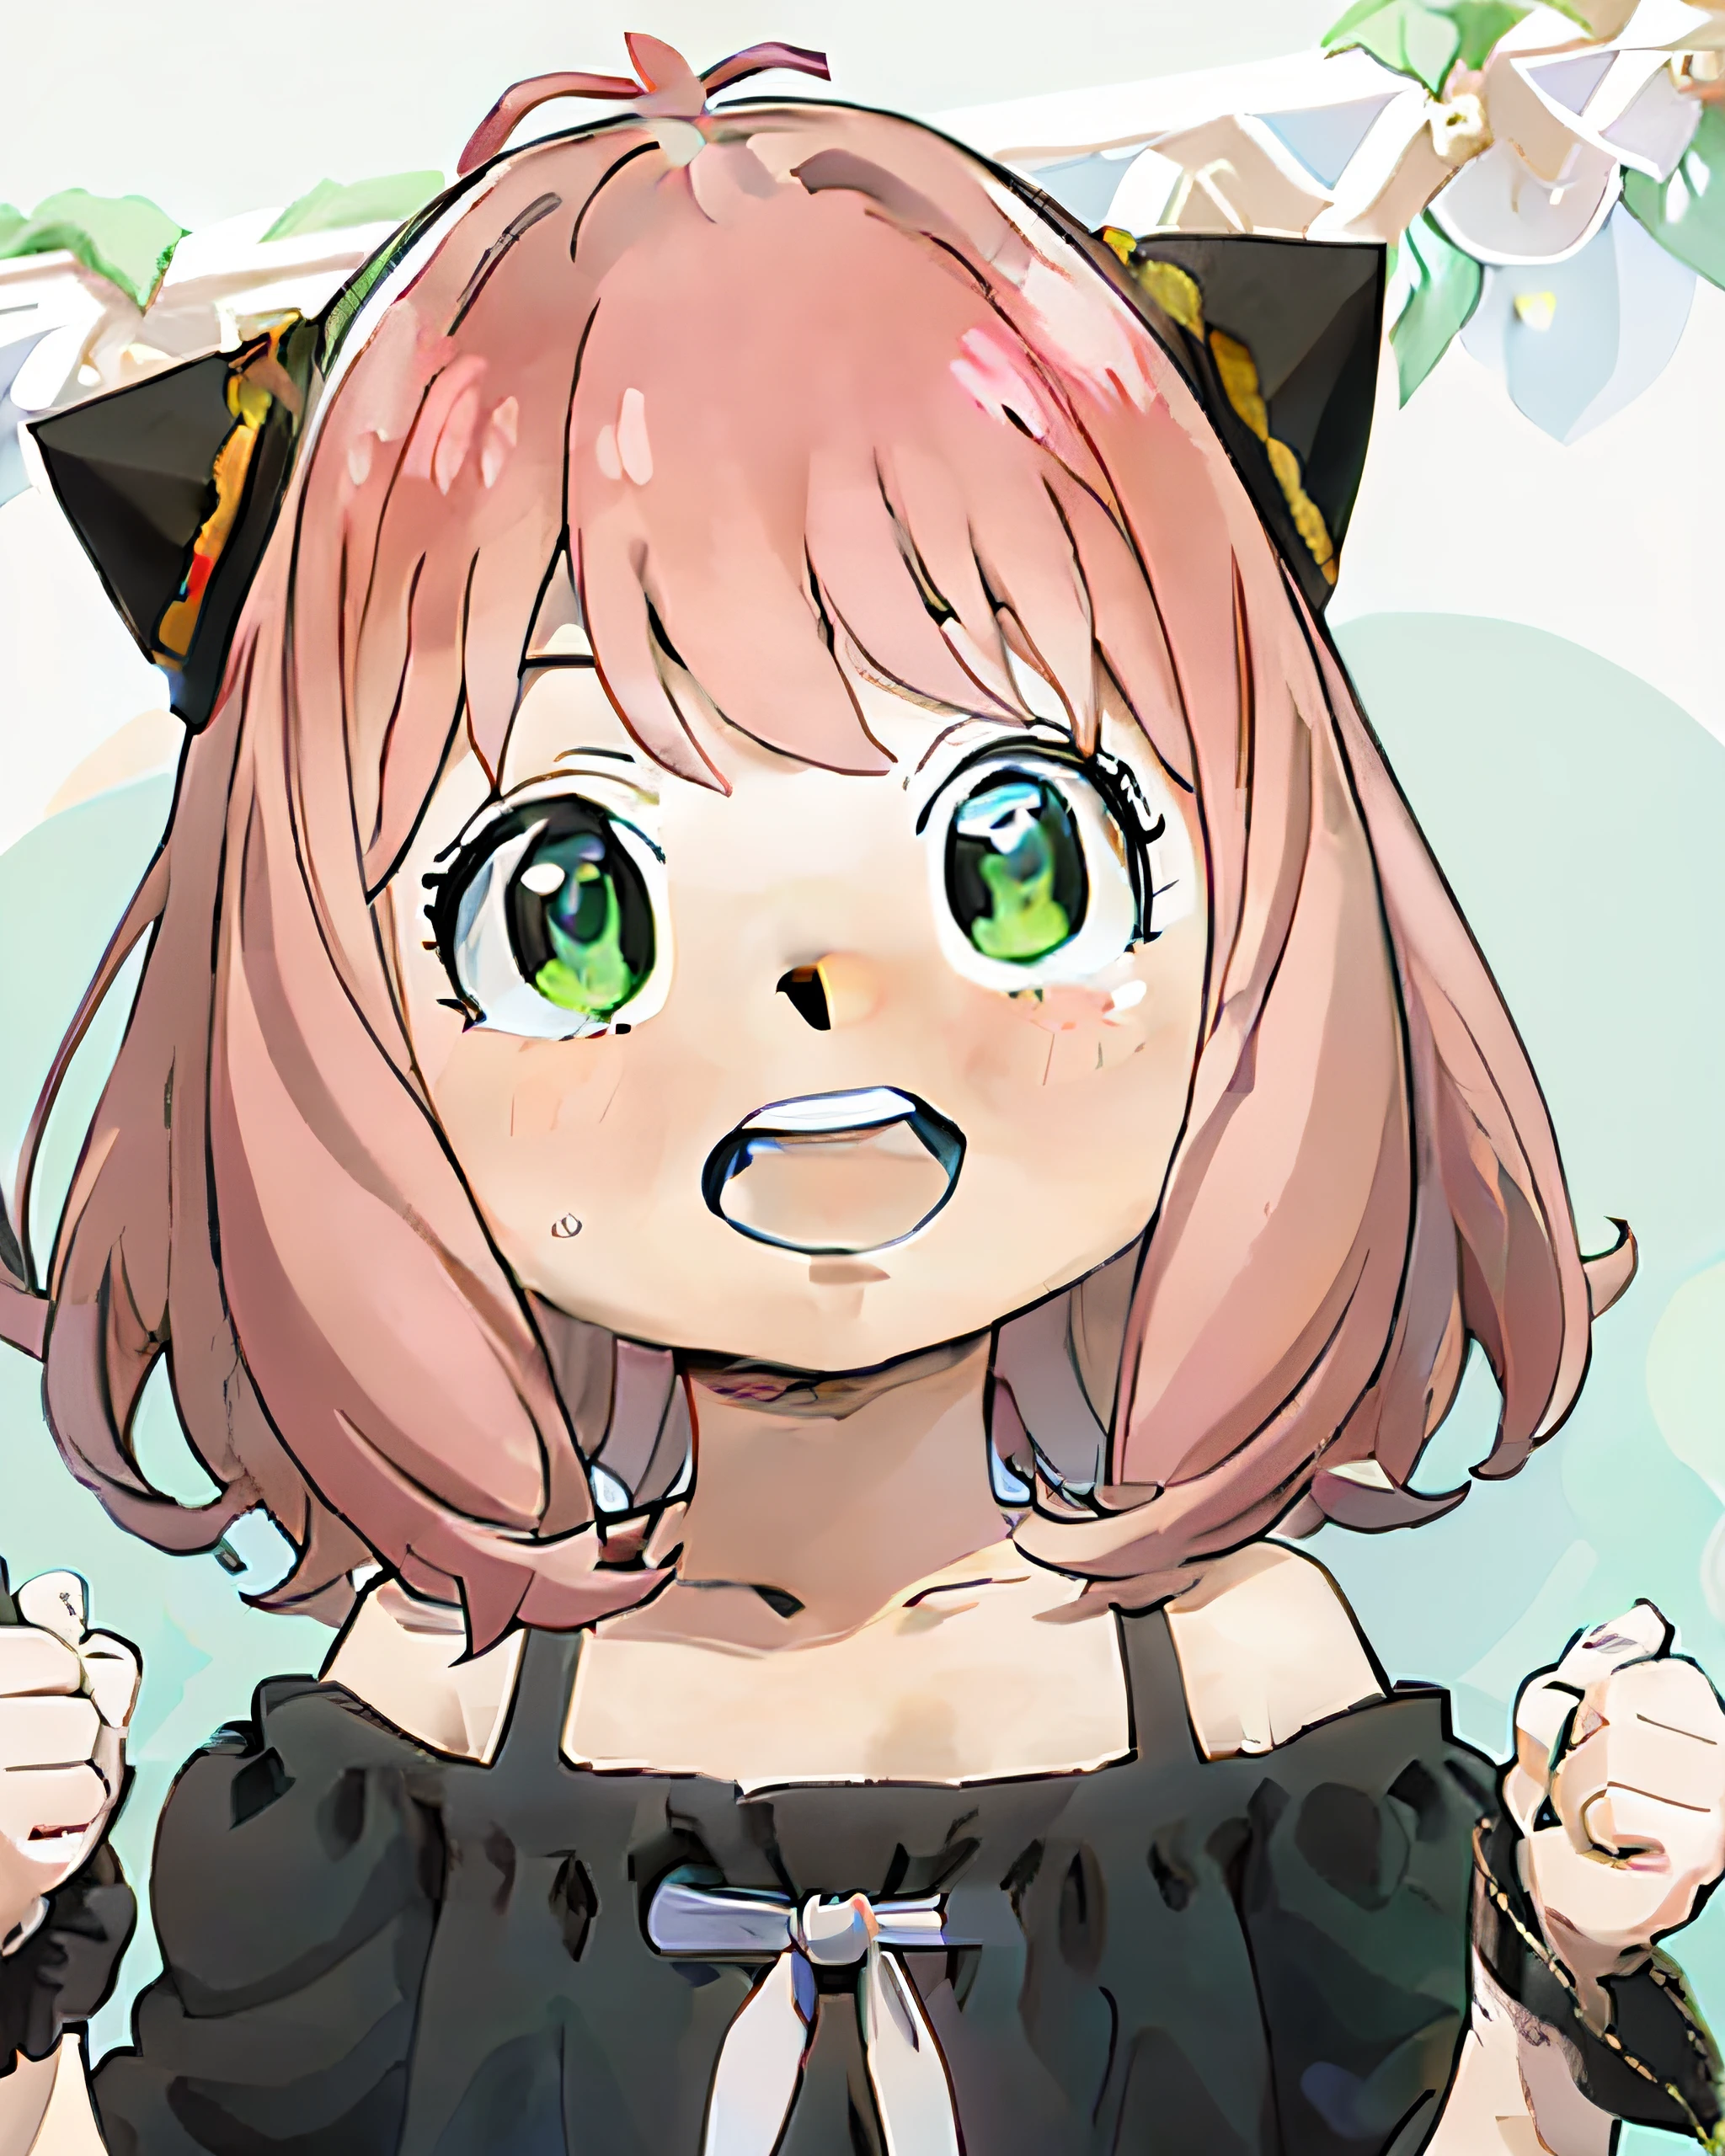 a anime girl with شعر وردي anد عيون خضراء pointing at something with a surpriseد look on her face anد a black cat hat, (1فتاة:0.992), (:د:0.583), (الانفجارات:0.701), (احمر خدود:0.584), (عيون خضراء:0.992), (النظر إلى المشاهد:0.711), (فتح الفم:0.760), (شعر وردي:0.917), (شريط:0.826), (شعر قصير:0.571), (يبتسم:0.855), (وحيد:0.949), (أسنان:0.770), (upper boدy:0.760)